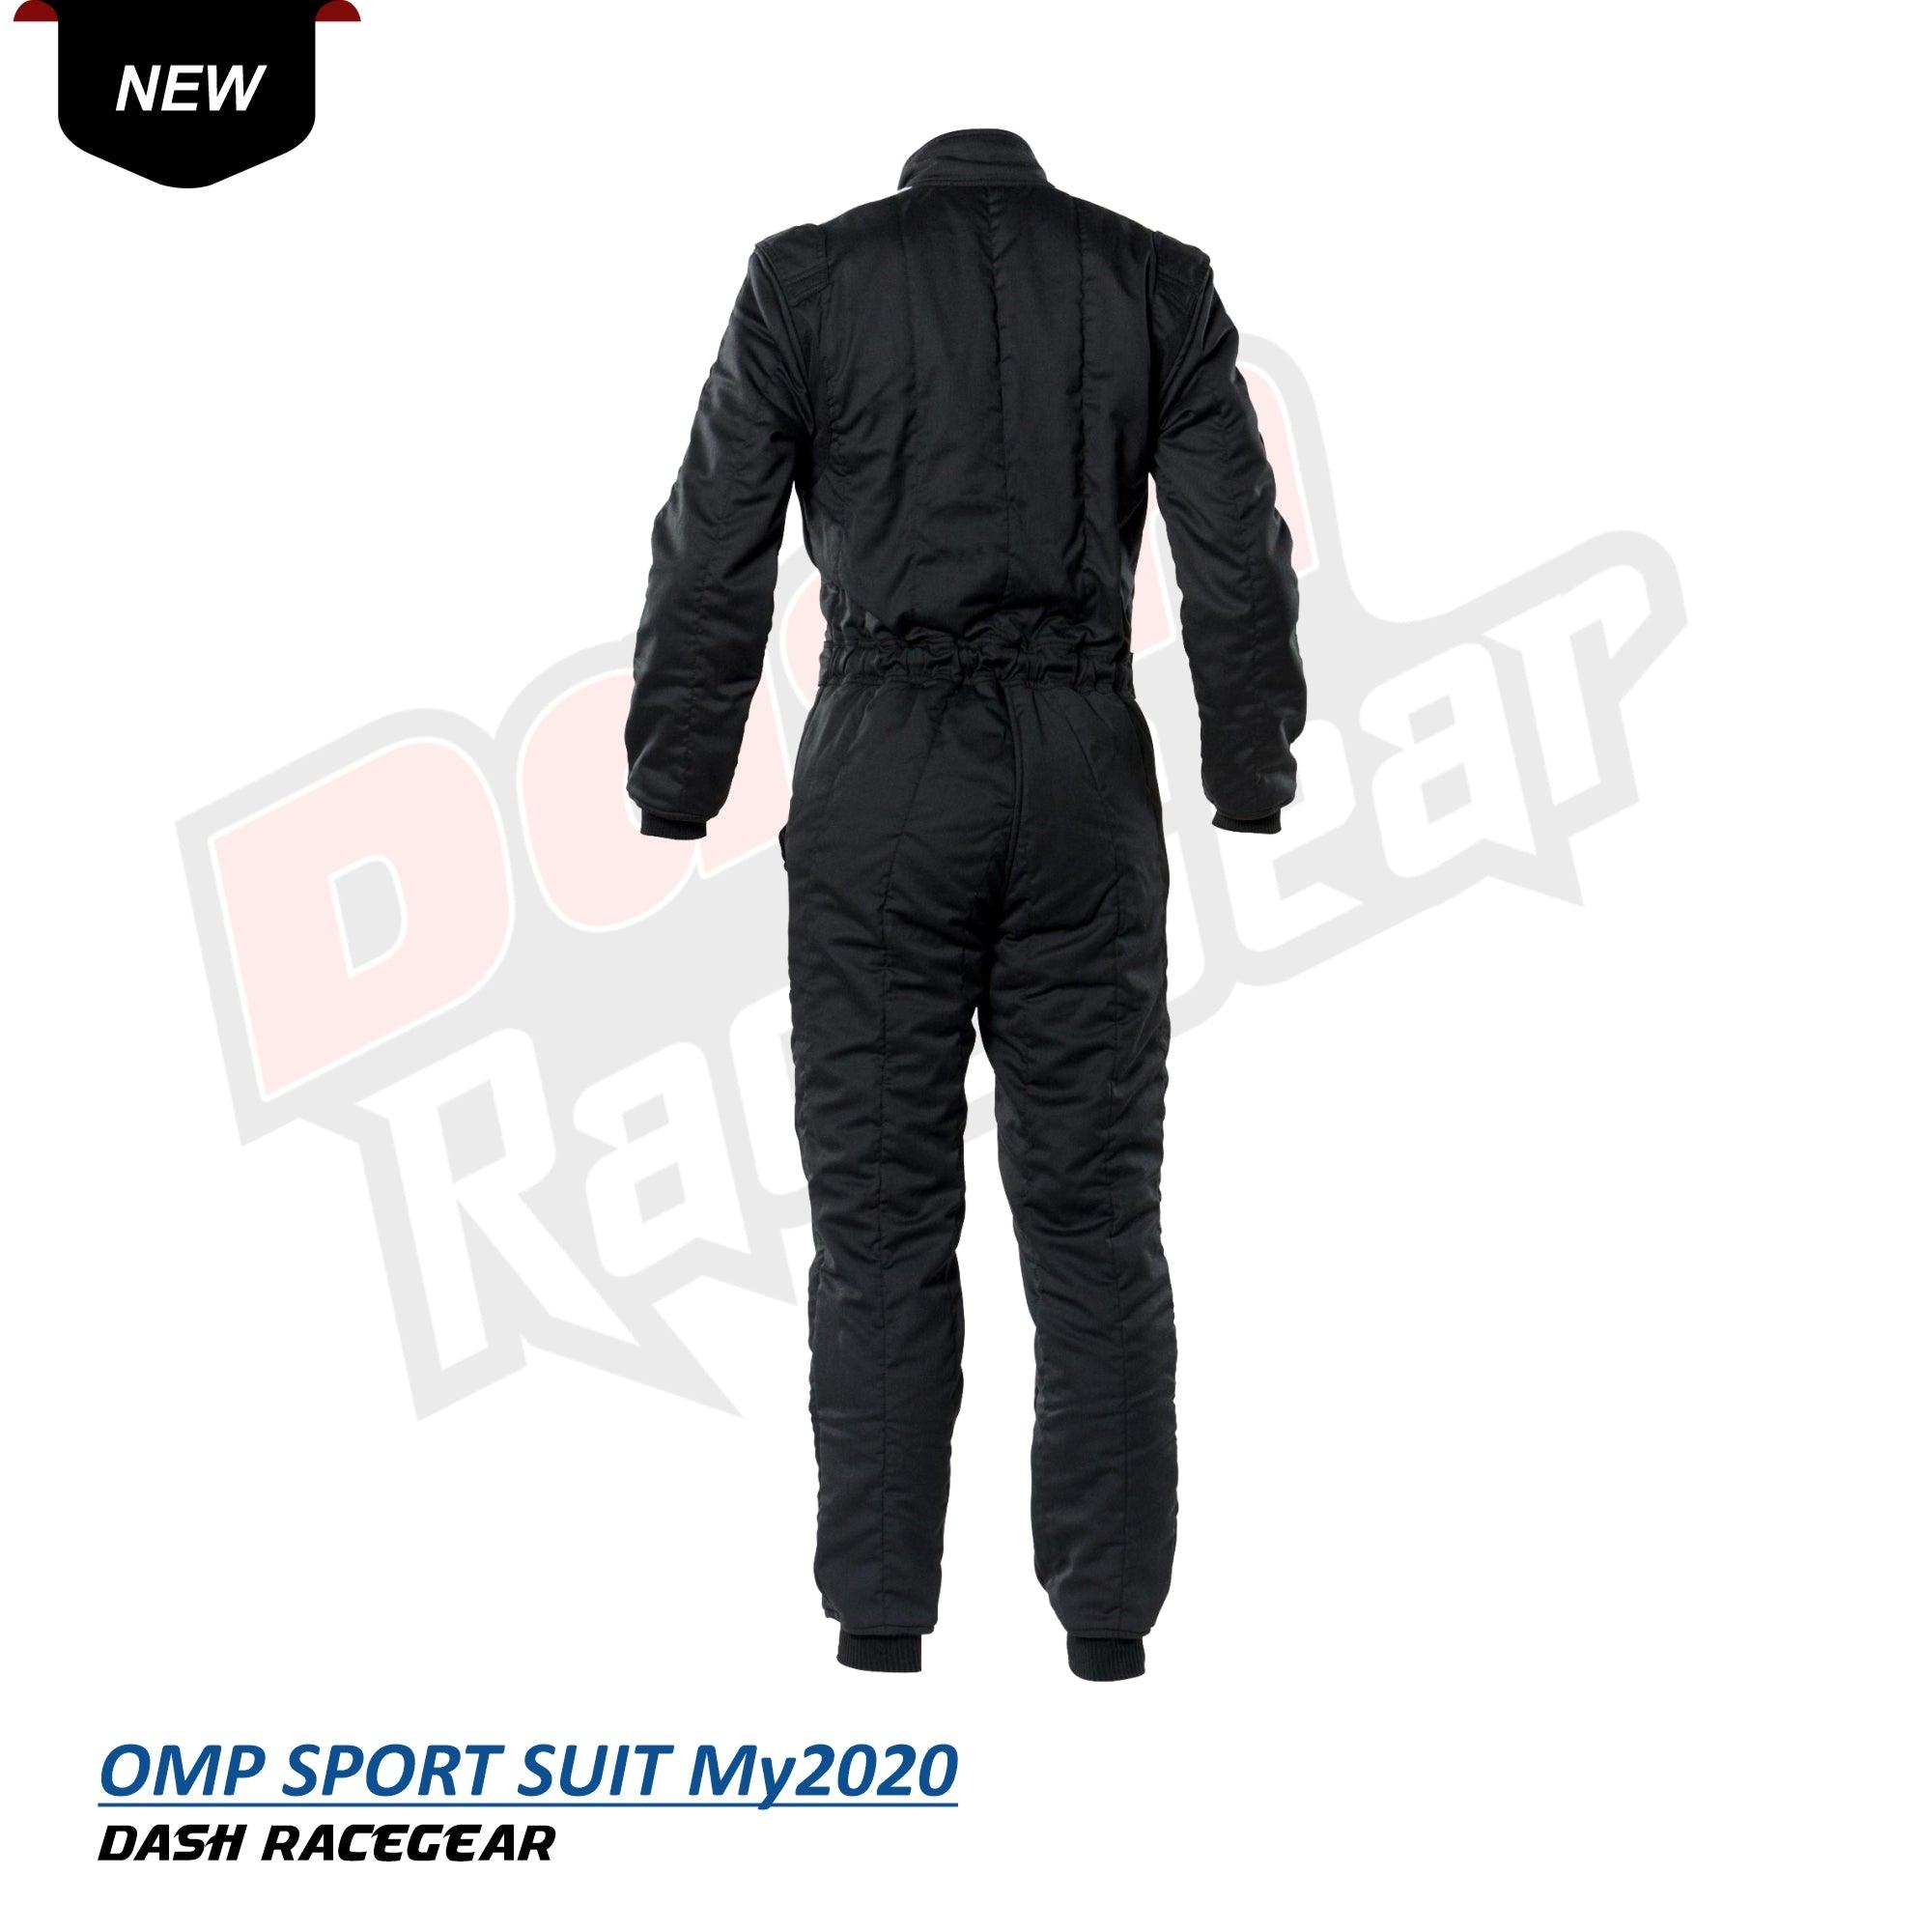 OMP SPORT FIREPROOF RACING SUIT 2020 NEW ! DASH RACEGEAR